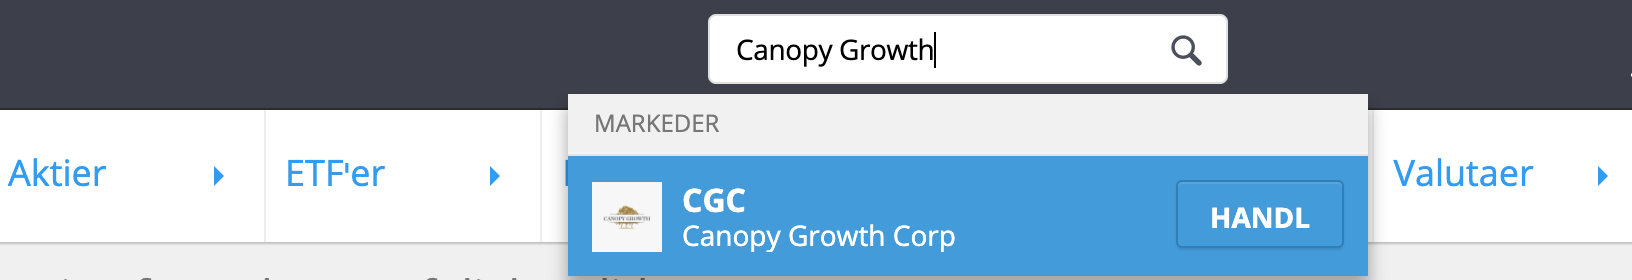 Canopy Growth Aktier